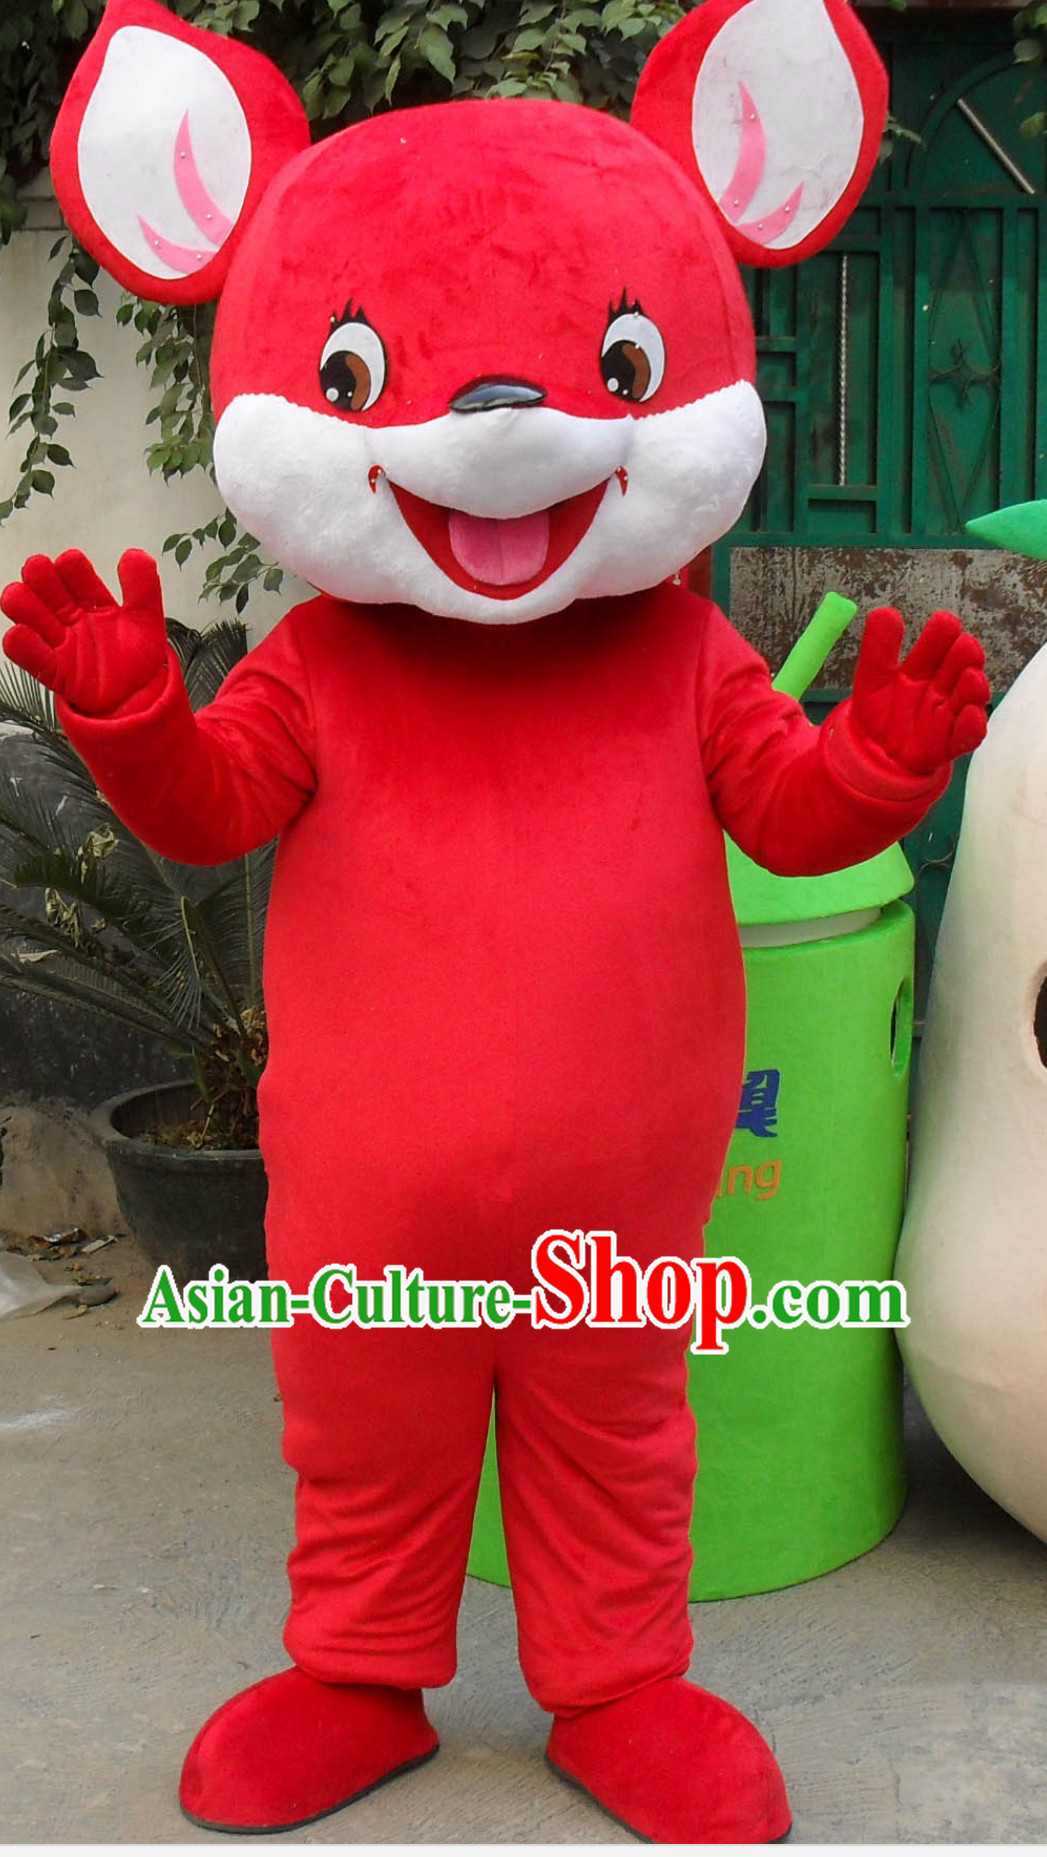 Lucky Red Chinese 2020 Rat Year Mascot Costume